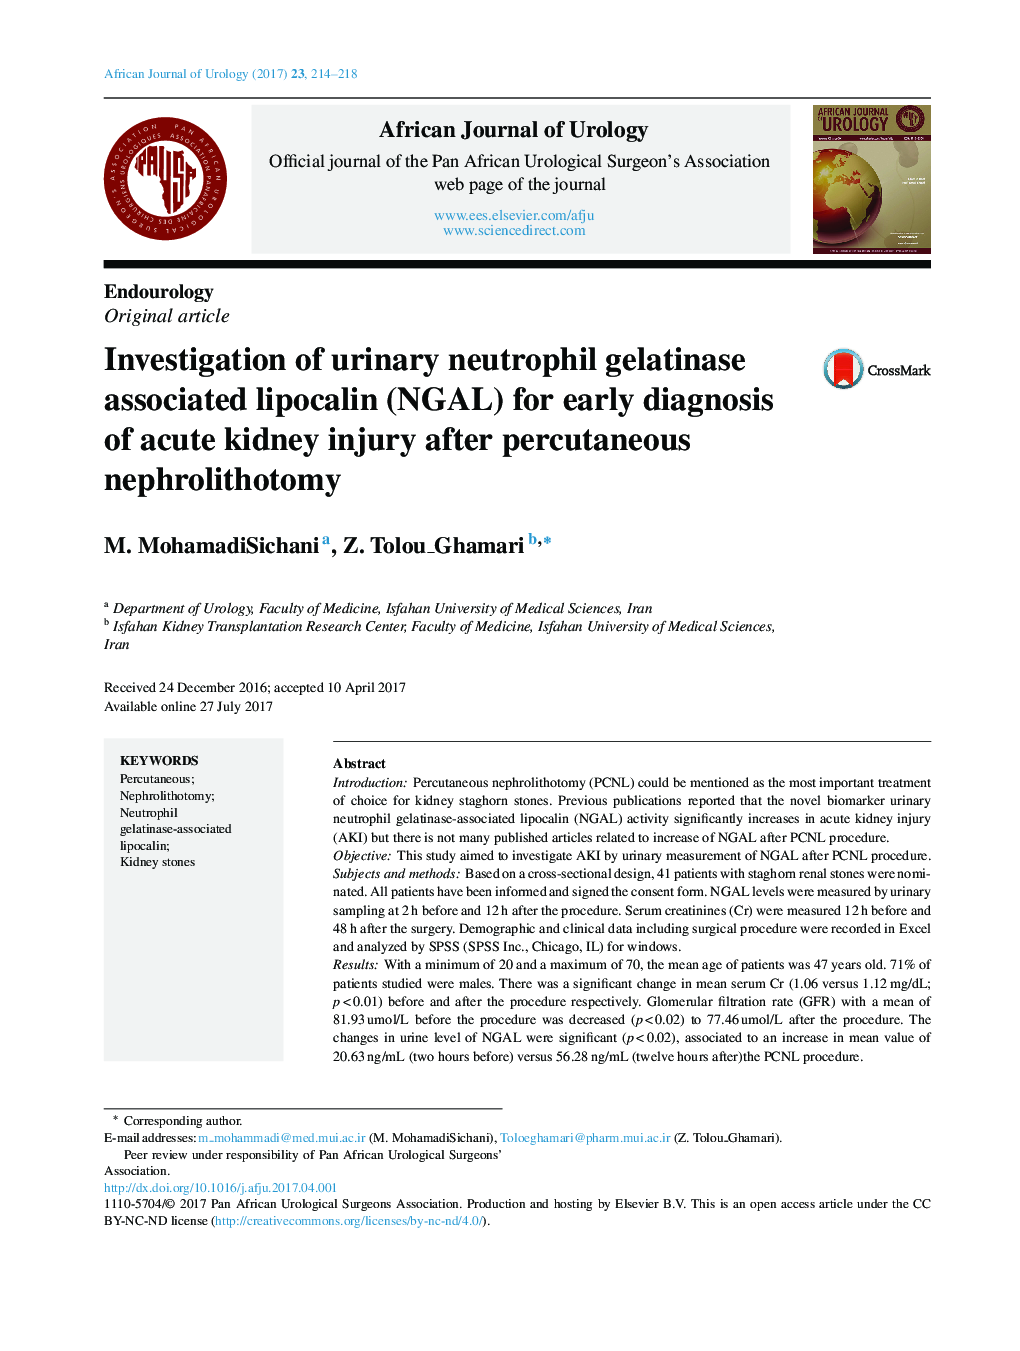 EndourologyOriginal articleInvestigation of urinary neutrophil gelatinase associated lipocalin (NGAL) for early diagnosis of acute kidney injury after percutaneous nephrolithotomy